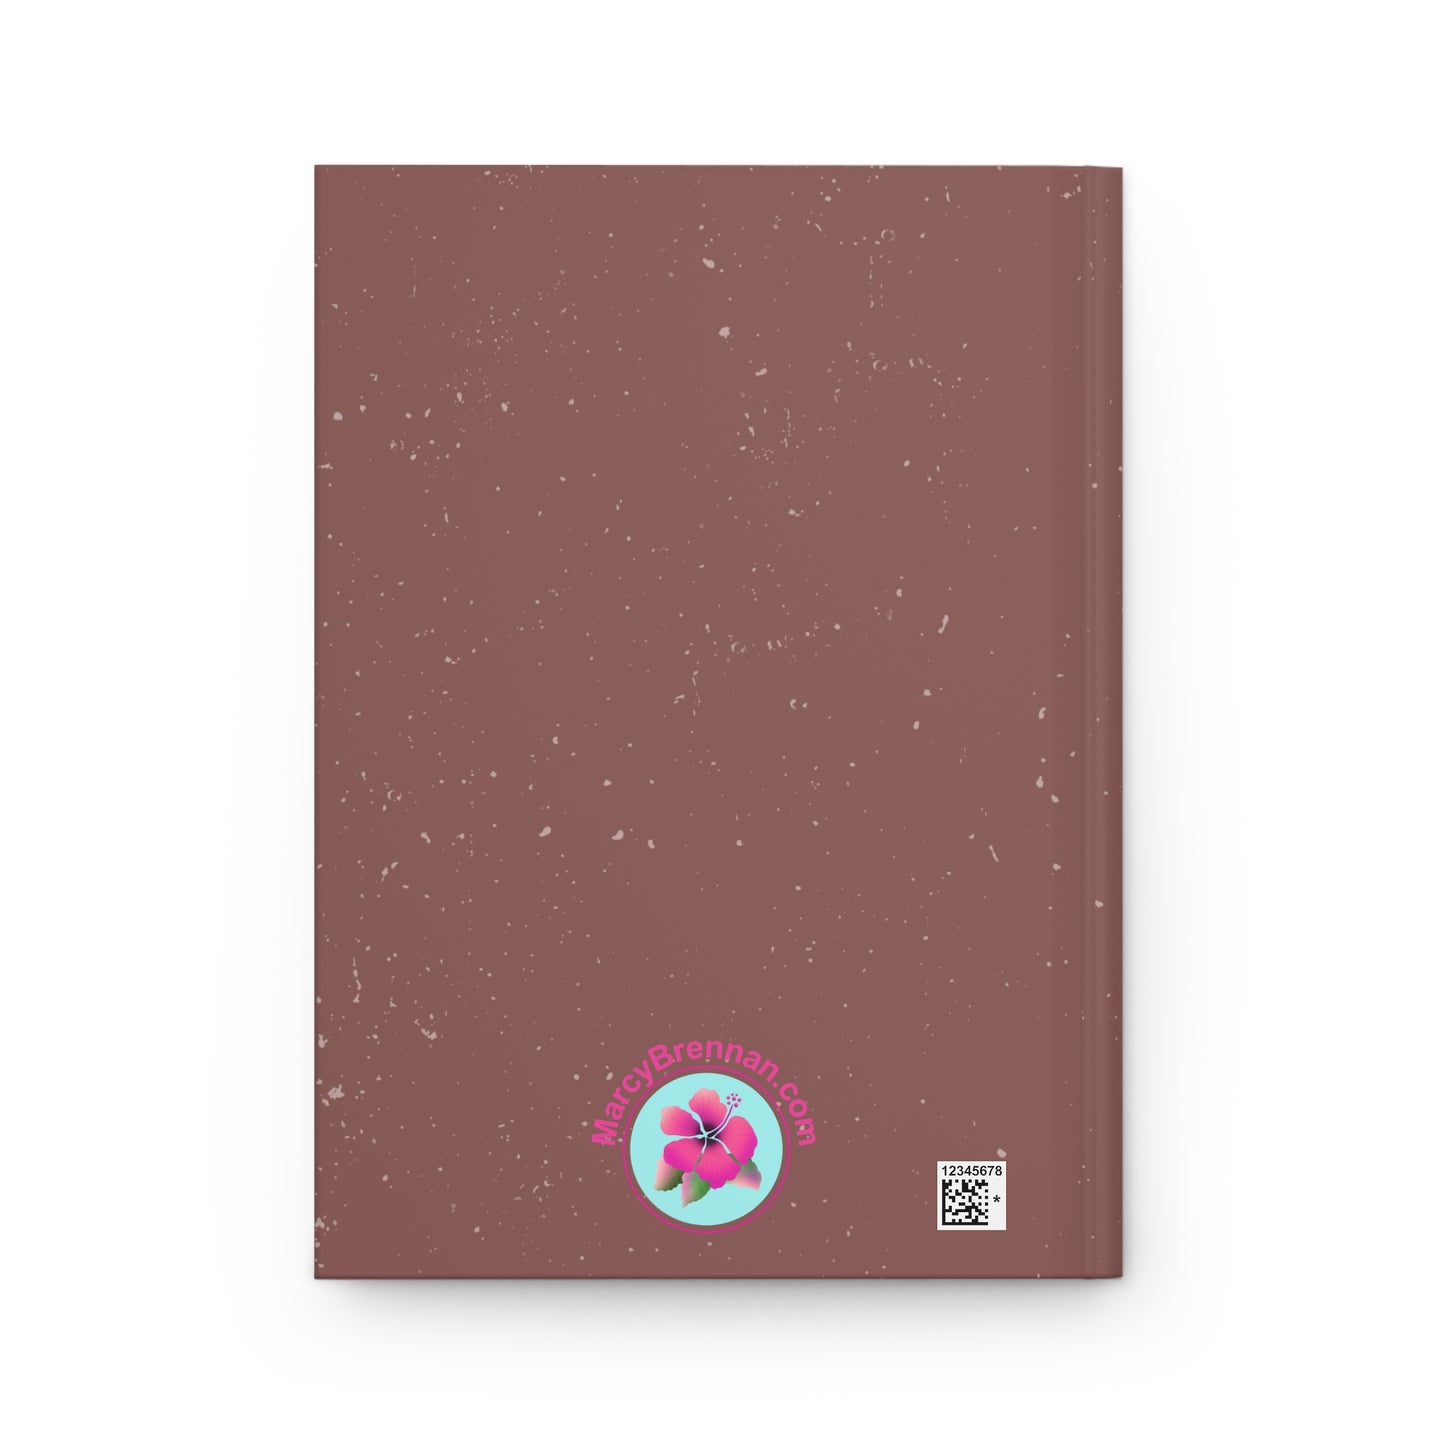 Peach Block Print Butterflies on Chocolate Brown Background Hardcover Journal